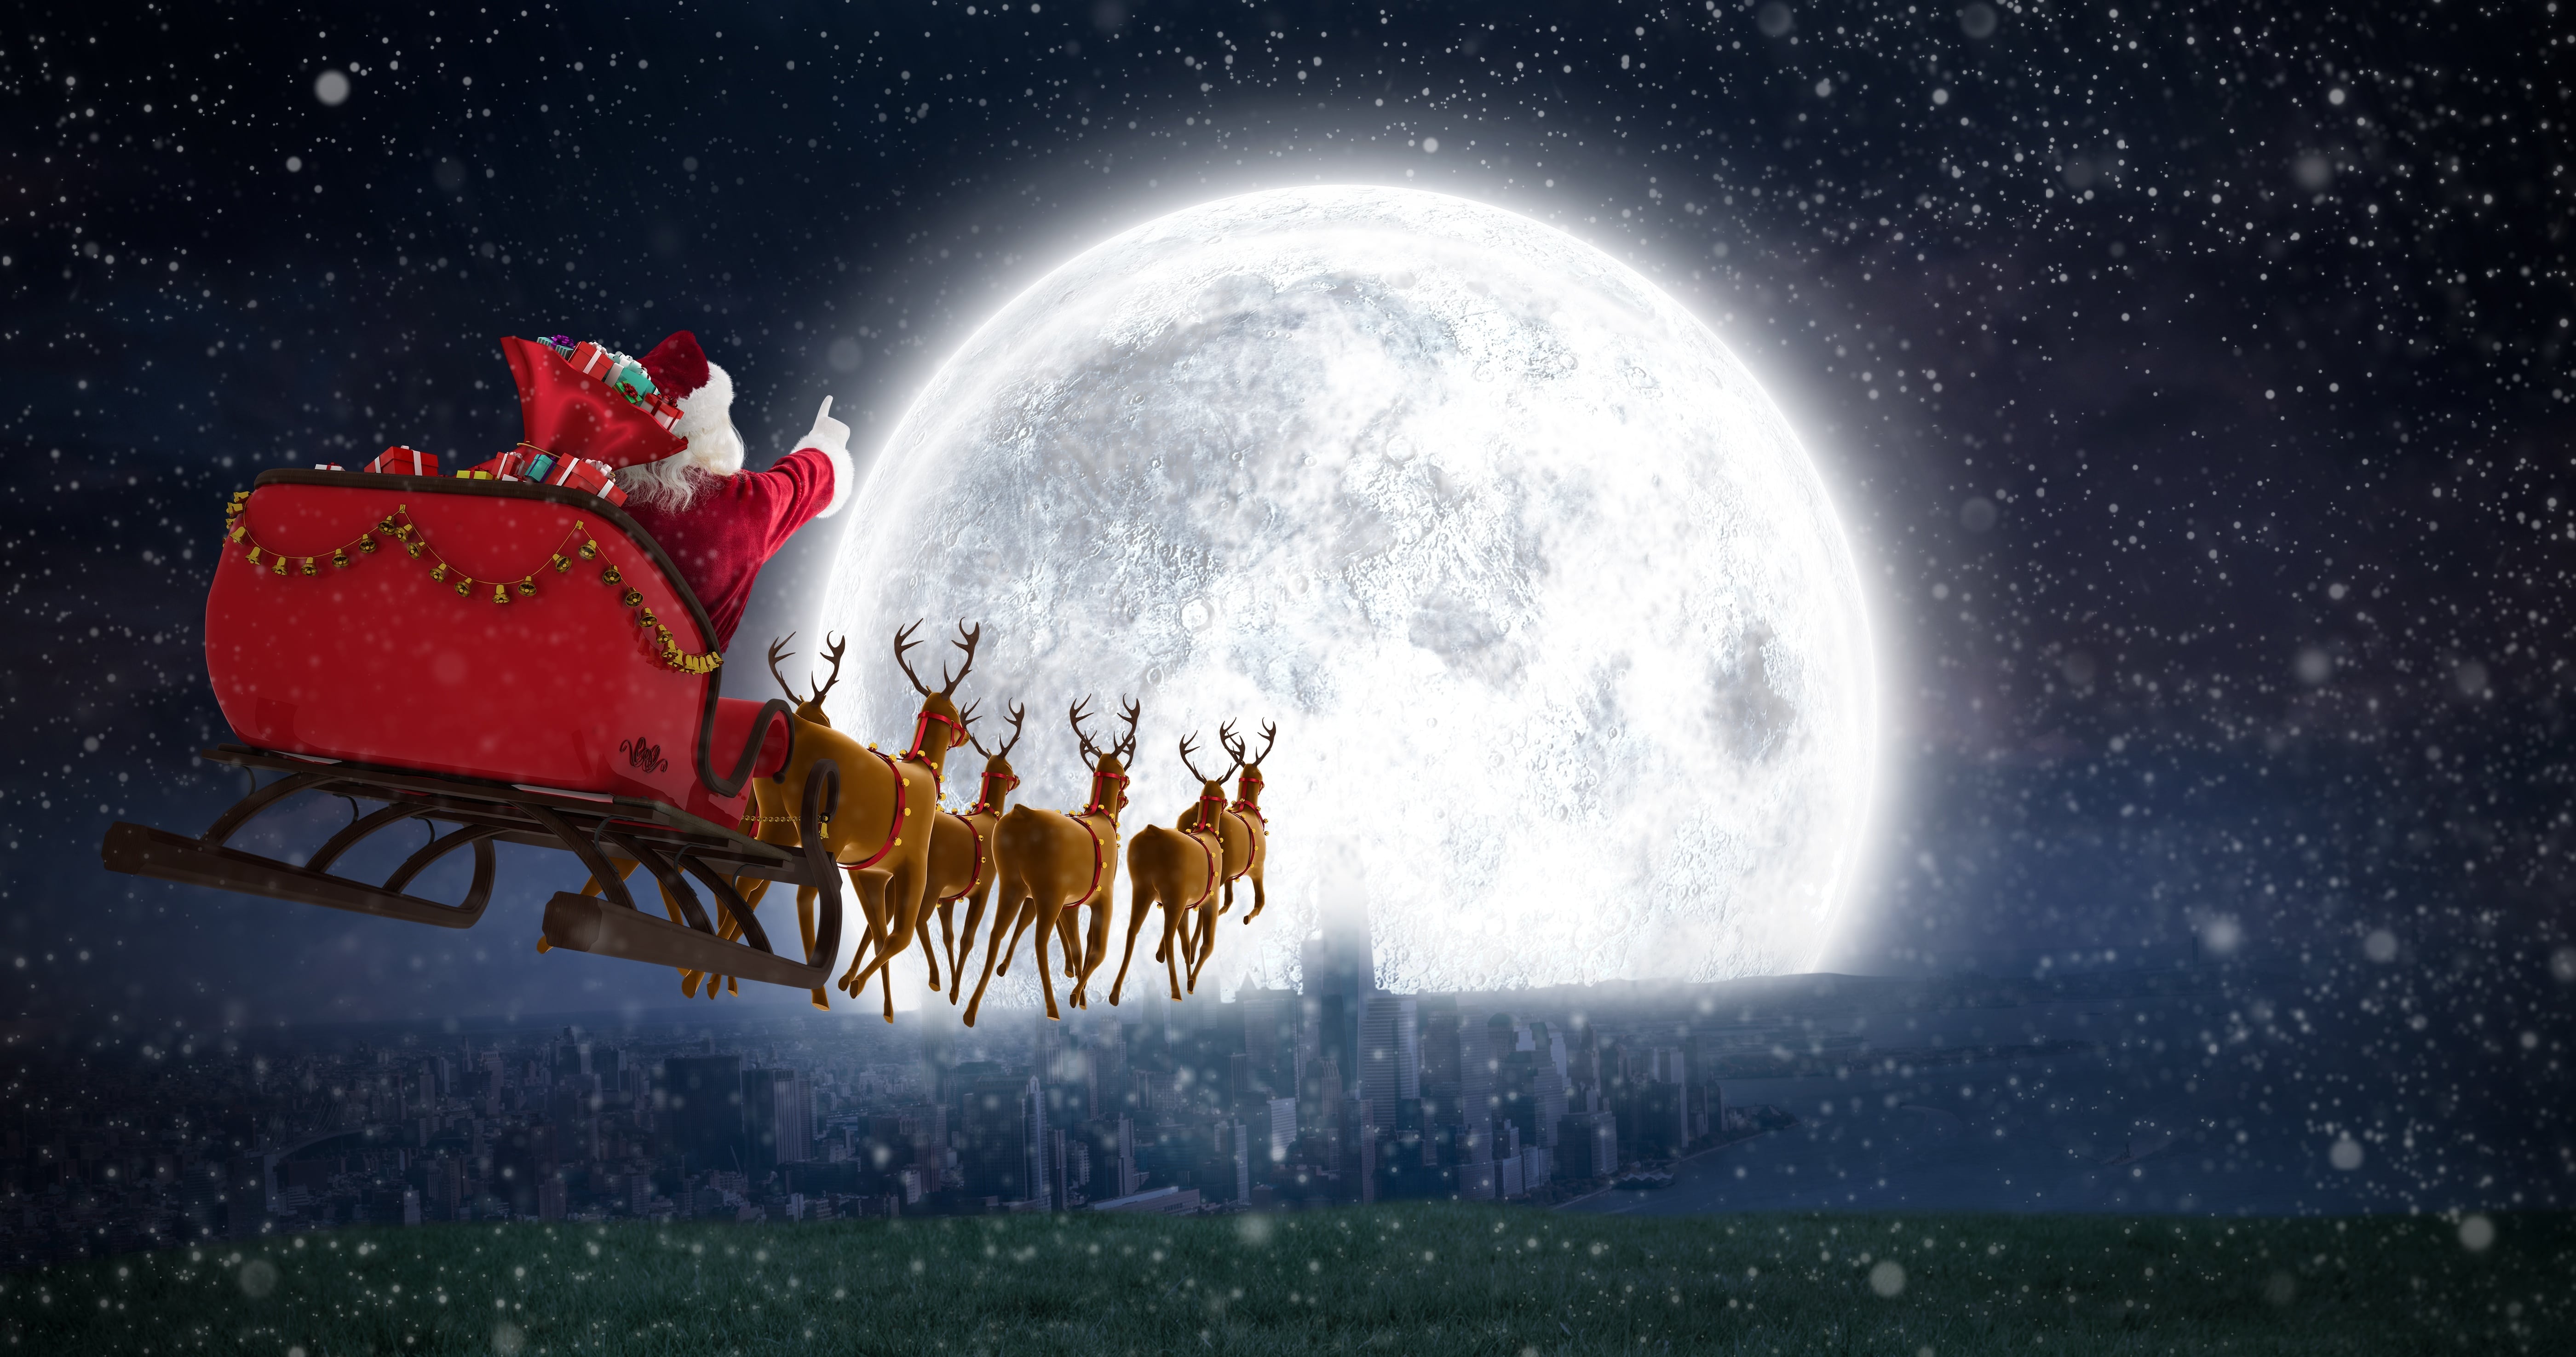 Santa is flying towards the moon at night in his reindeer-drawn sleigh. He is pointing ahead.